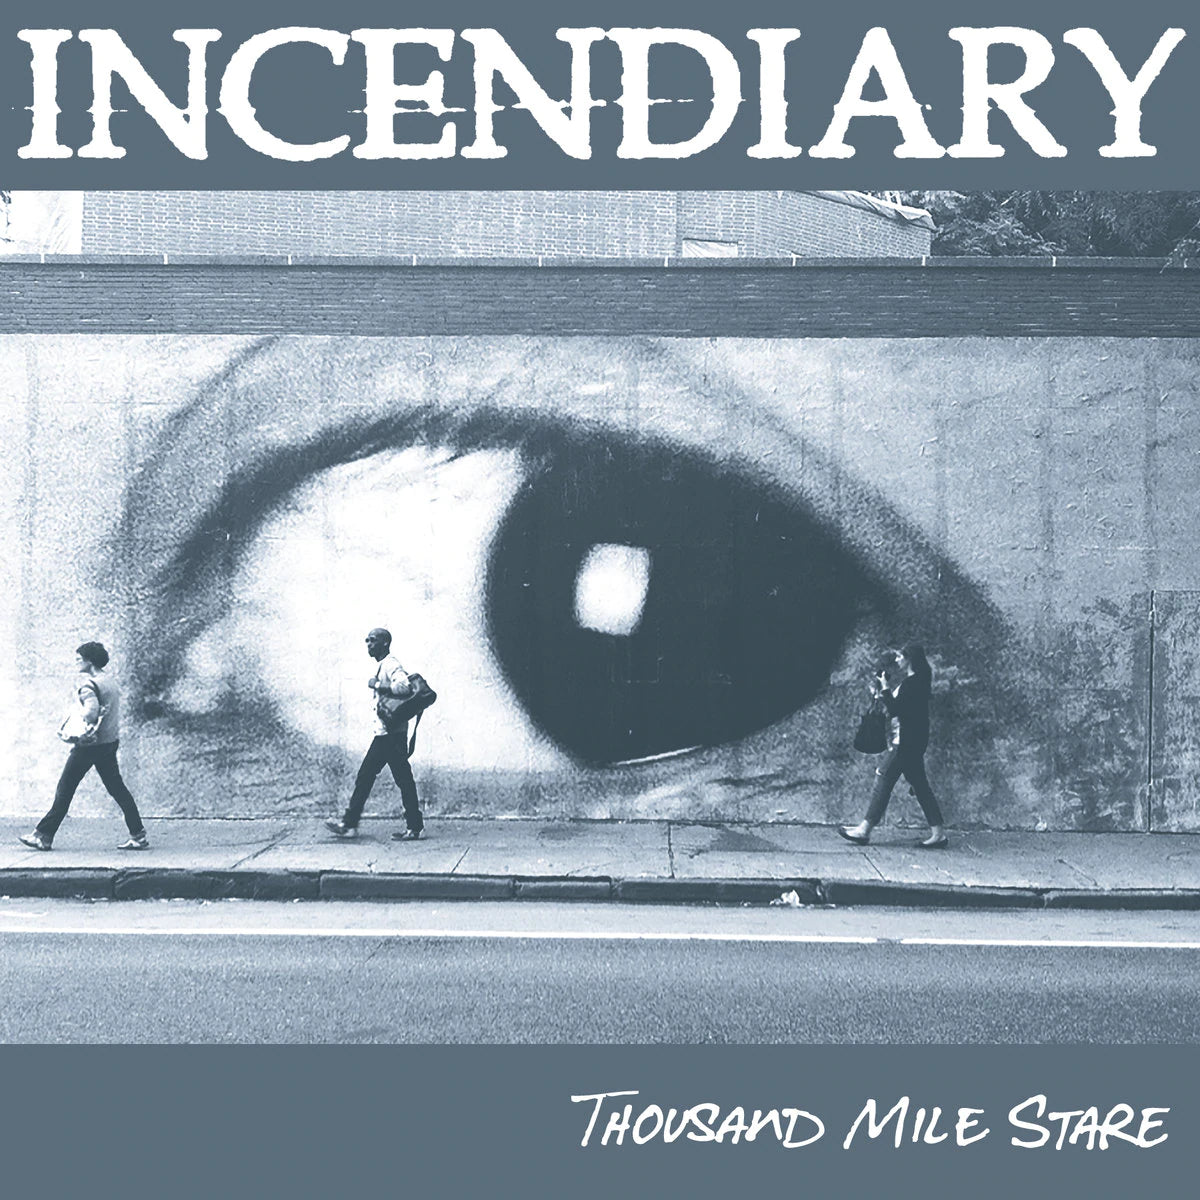 INCENDIARY - THOUSAND MILE STARE Vinyl LP